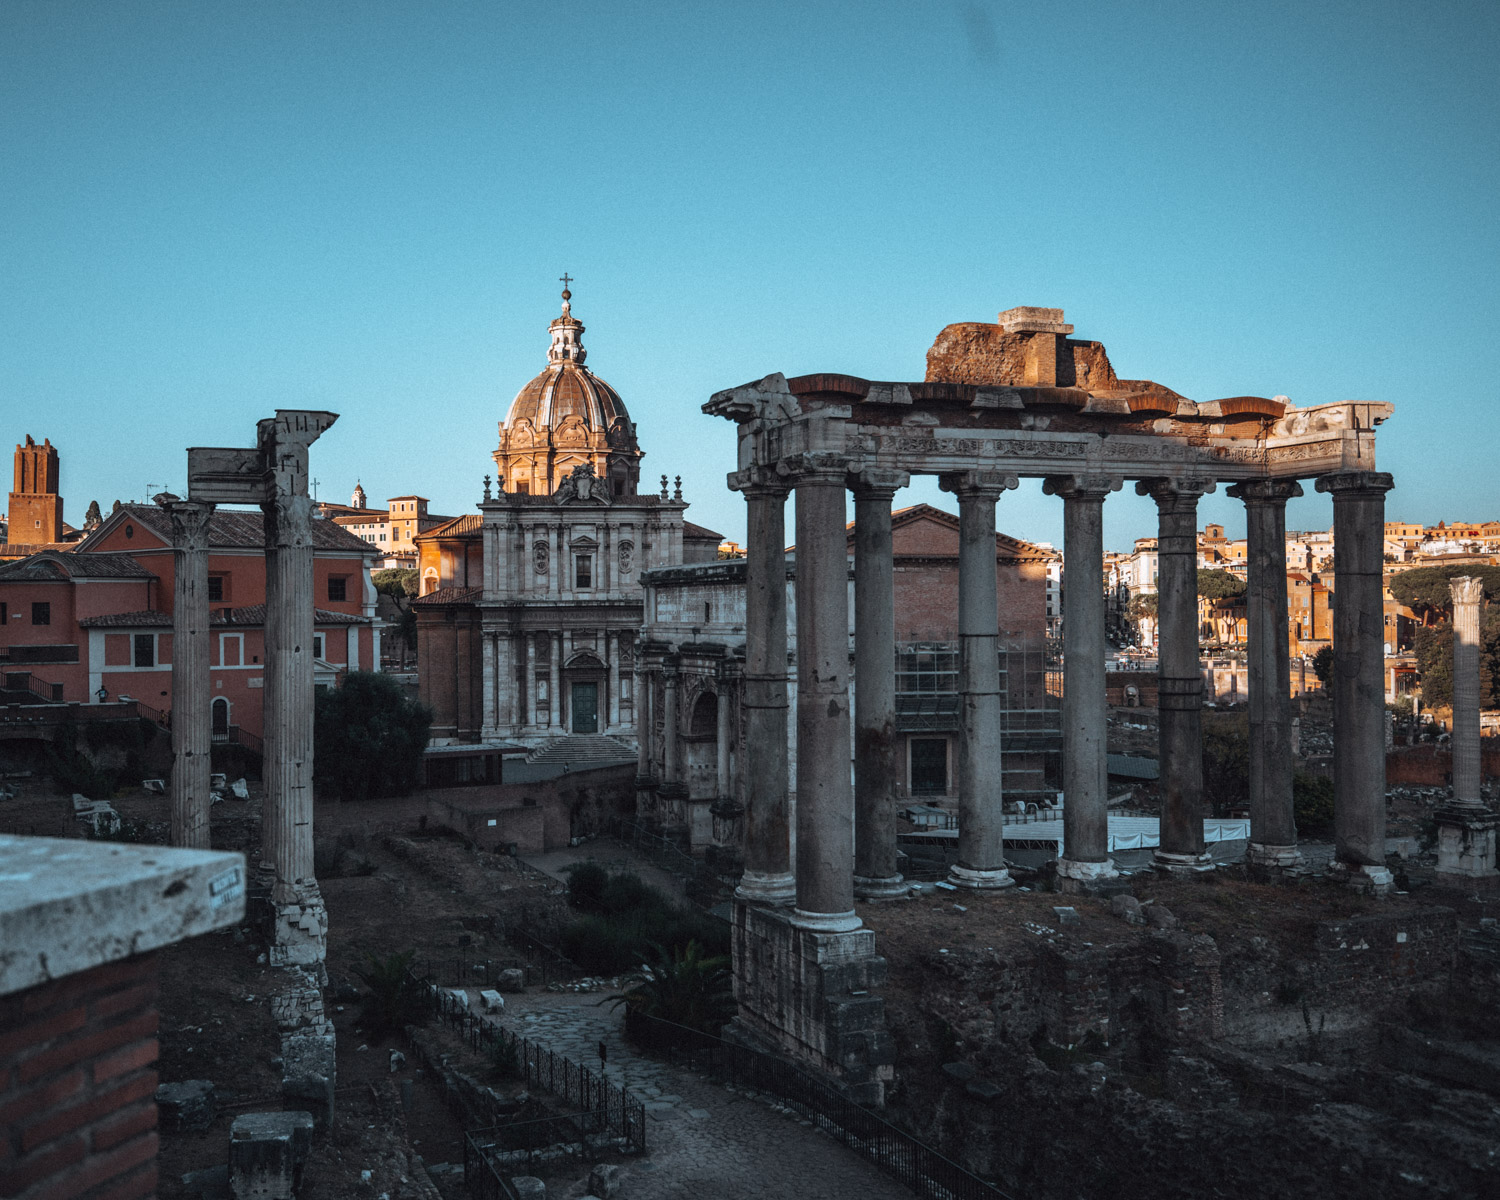 4 days in Rome